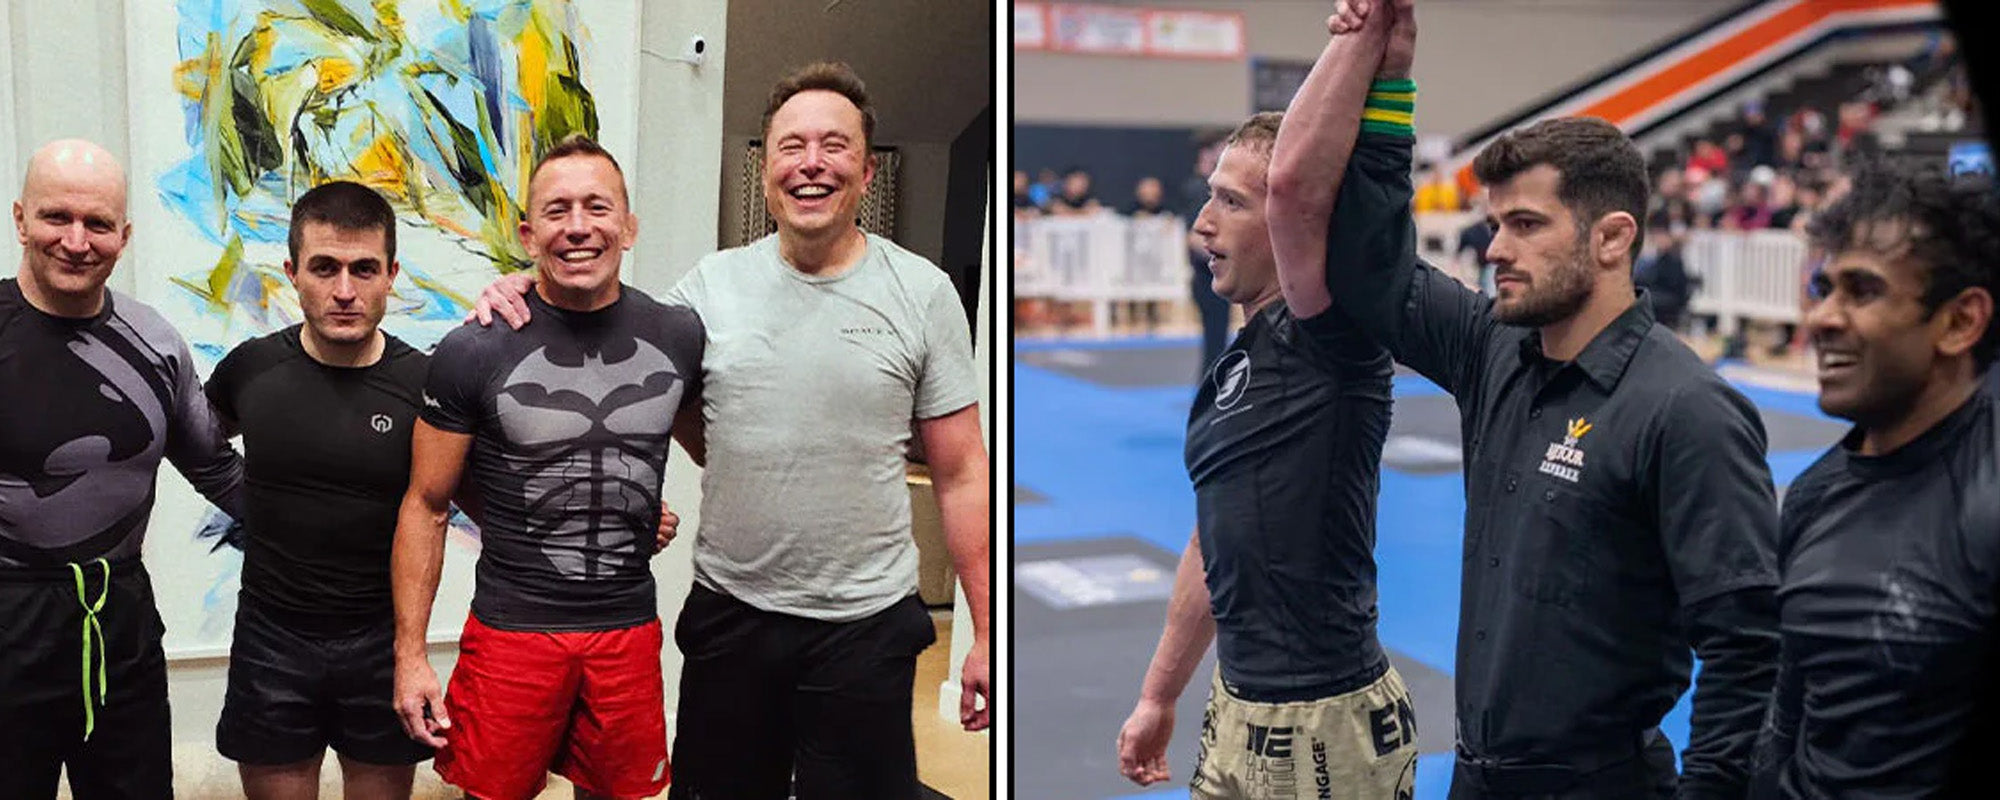 Elon Musk and Mark Zuckerberg’s BJJ Training with Top Notch Instructors